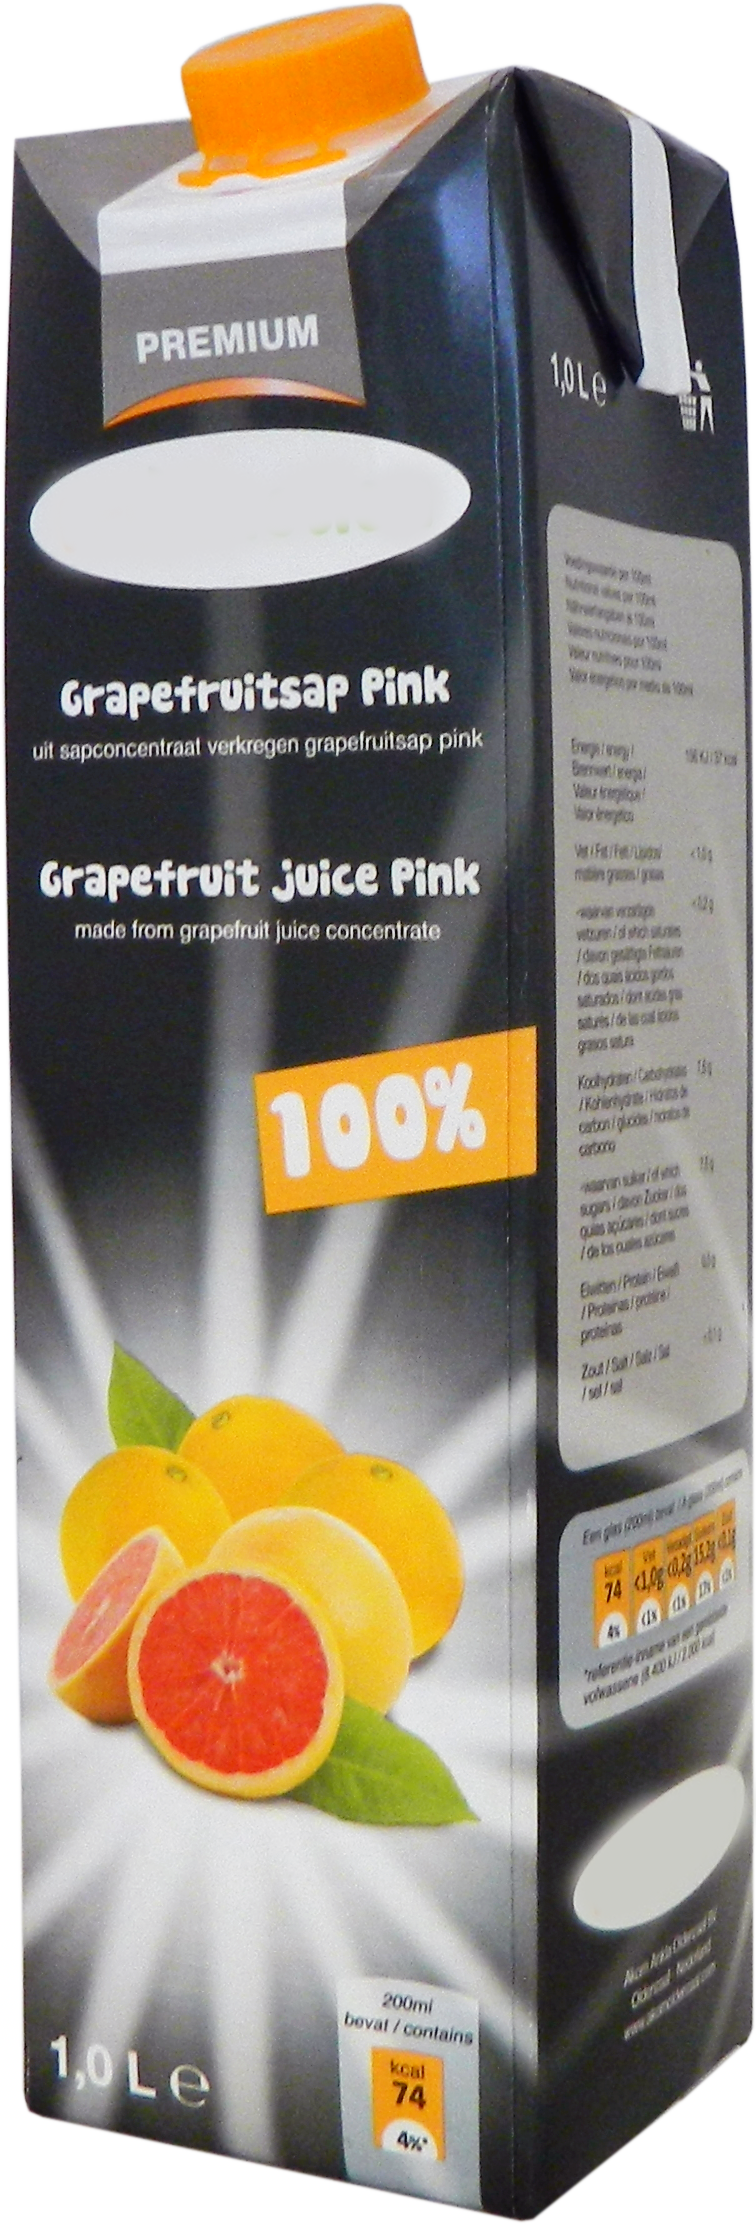 Premium Grapefruitsap 1,0 liter